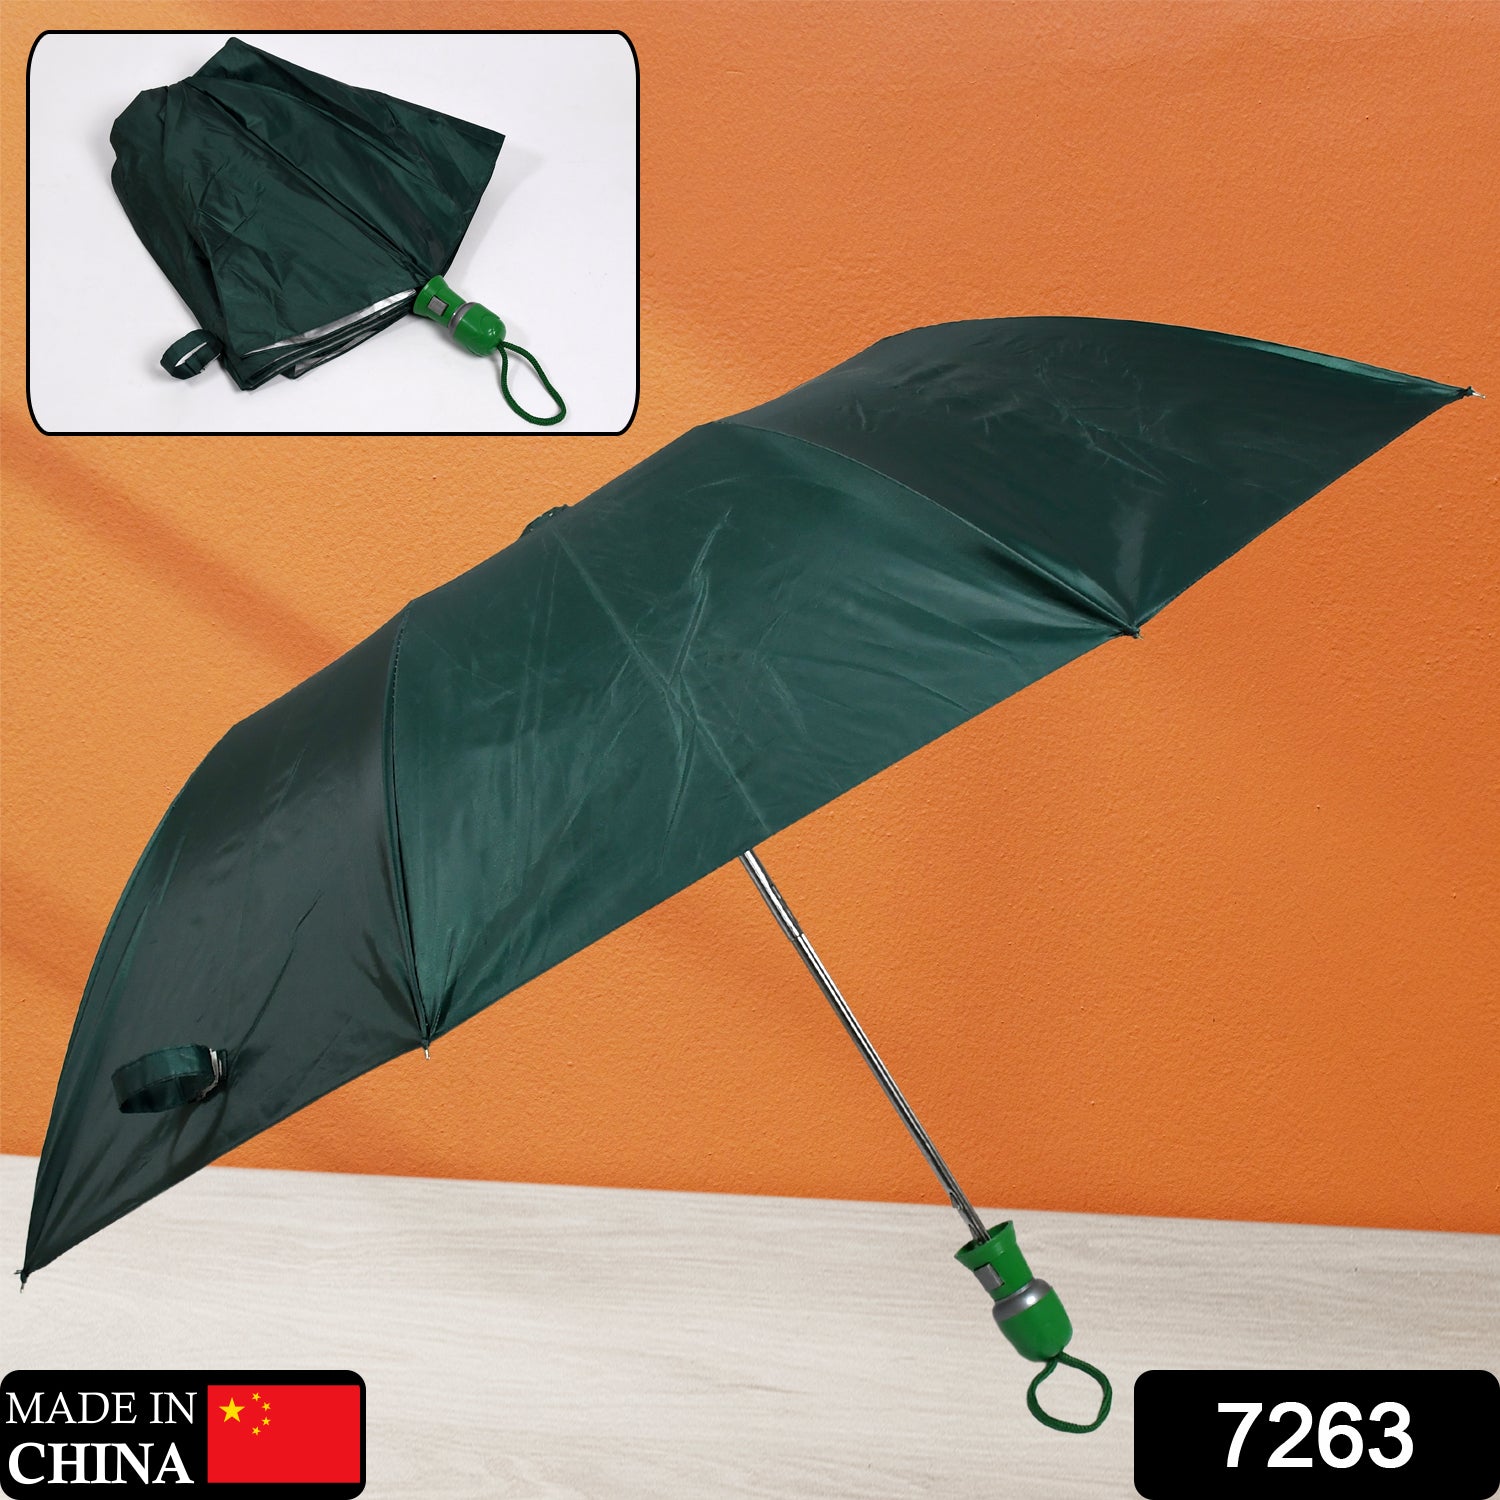 7263 Umbrella Automatic Open Travel Umbrella with Wind Vent,Umbrella 